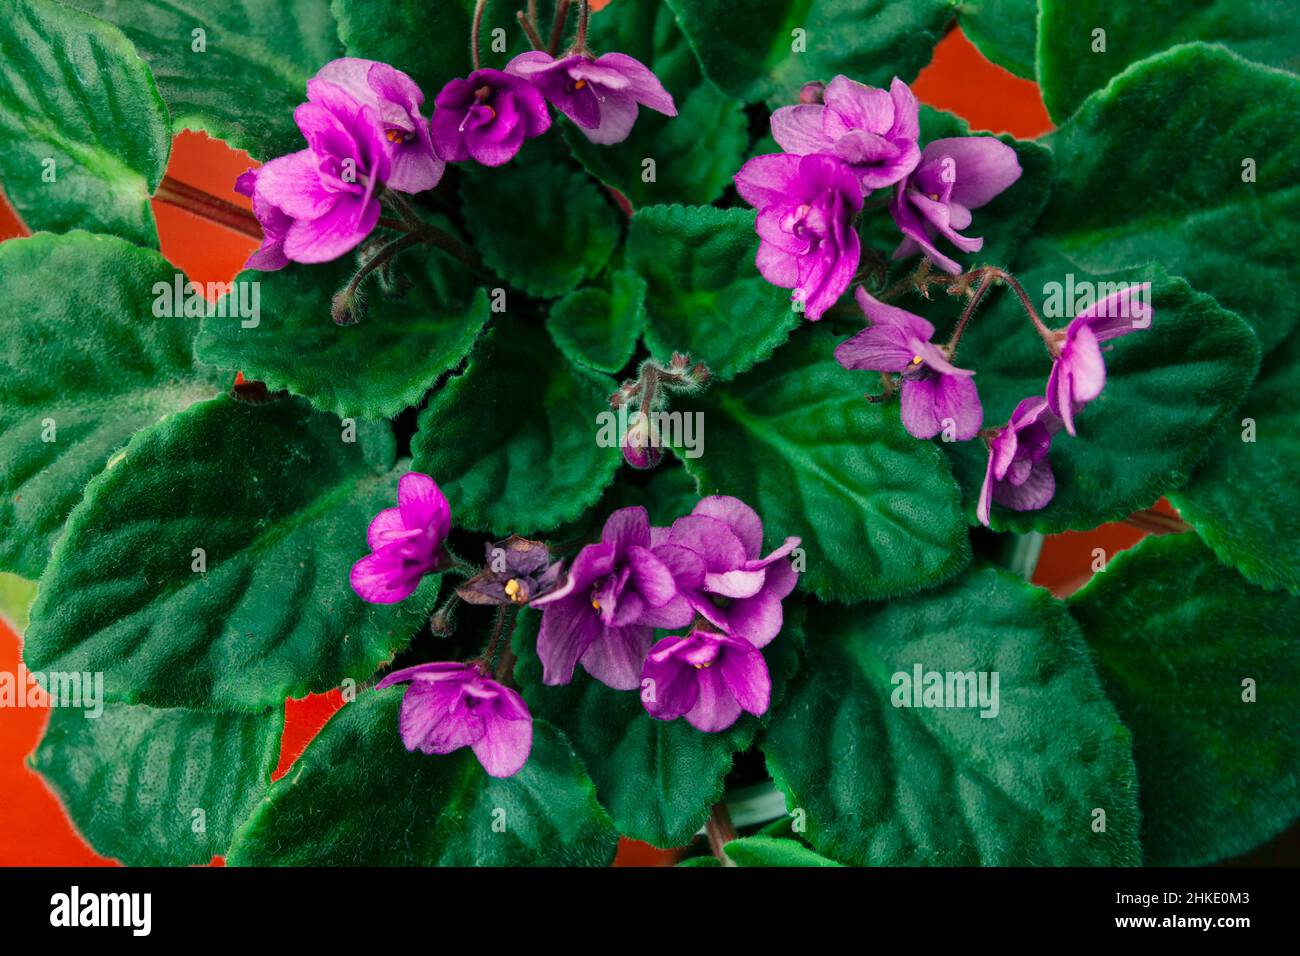 Streptocarpus Flowering Plant . African Violet Flowers in Bloom . Flowers and Green Leaves Stock Photo